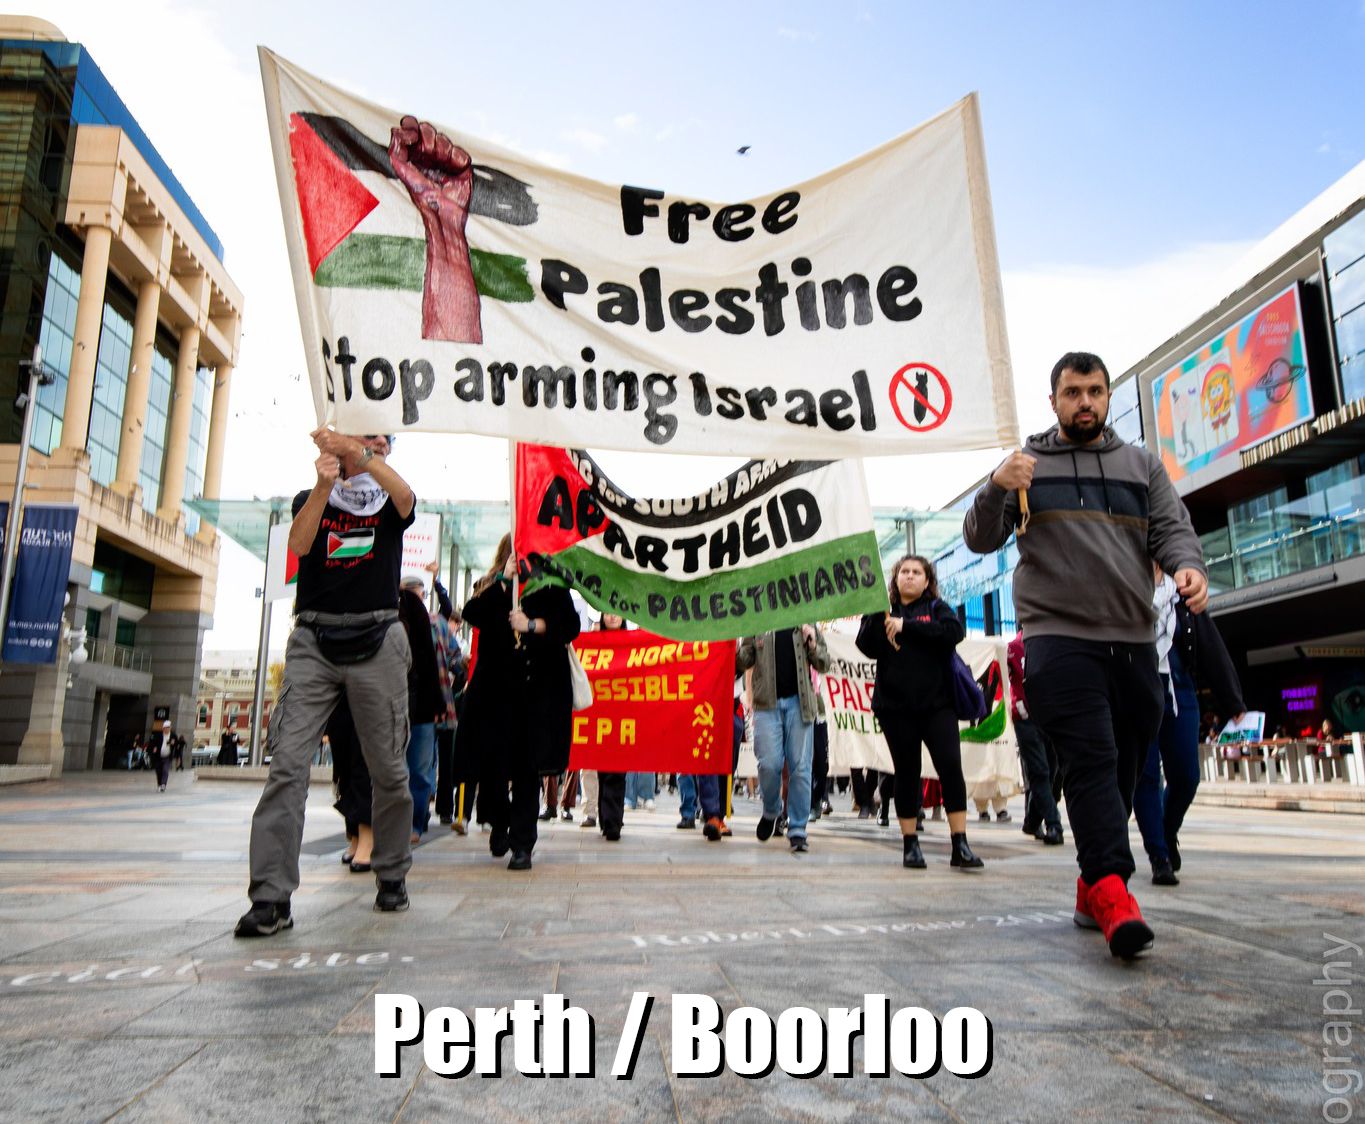 Activists in Perth/Boorloo protesting Nakba 75